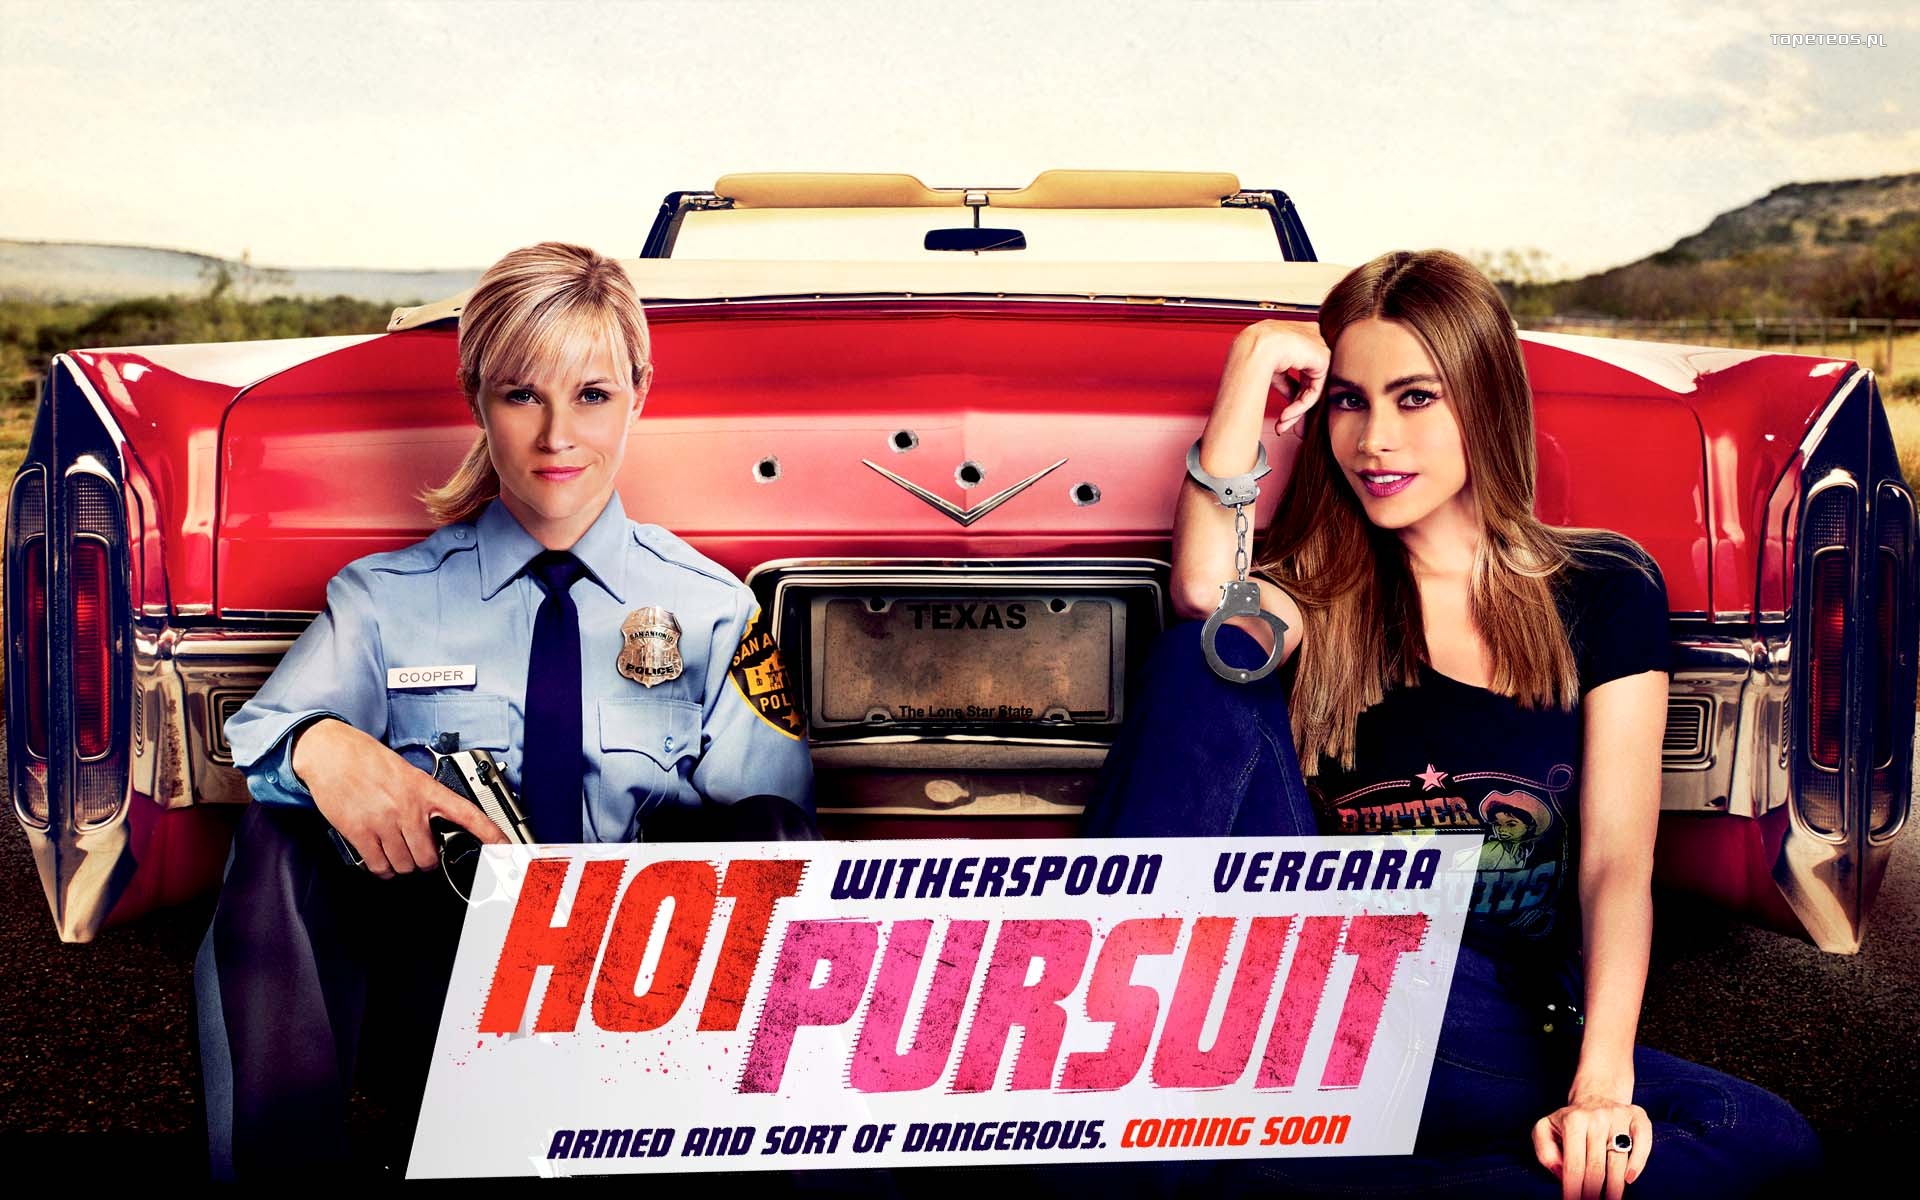 Goracy poscig (2015) Hot Pursuit 001 Reese Witherspoon jako Cooper, Sofia Vergara jako Daniella Riva, Samochod